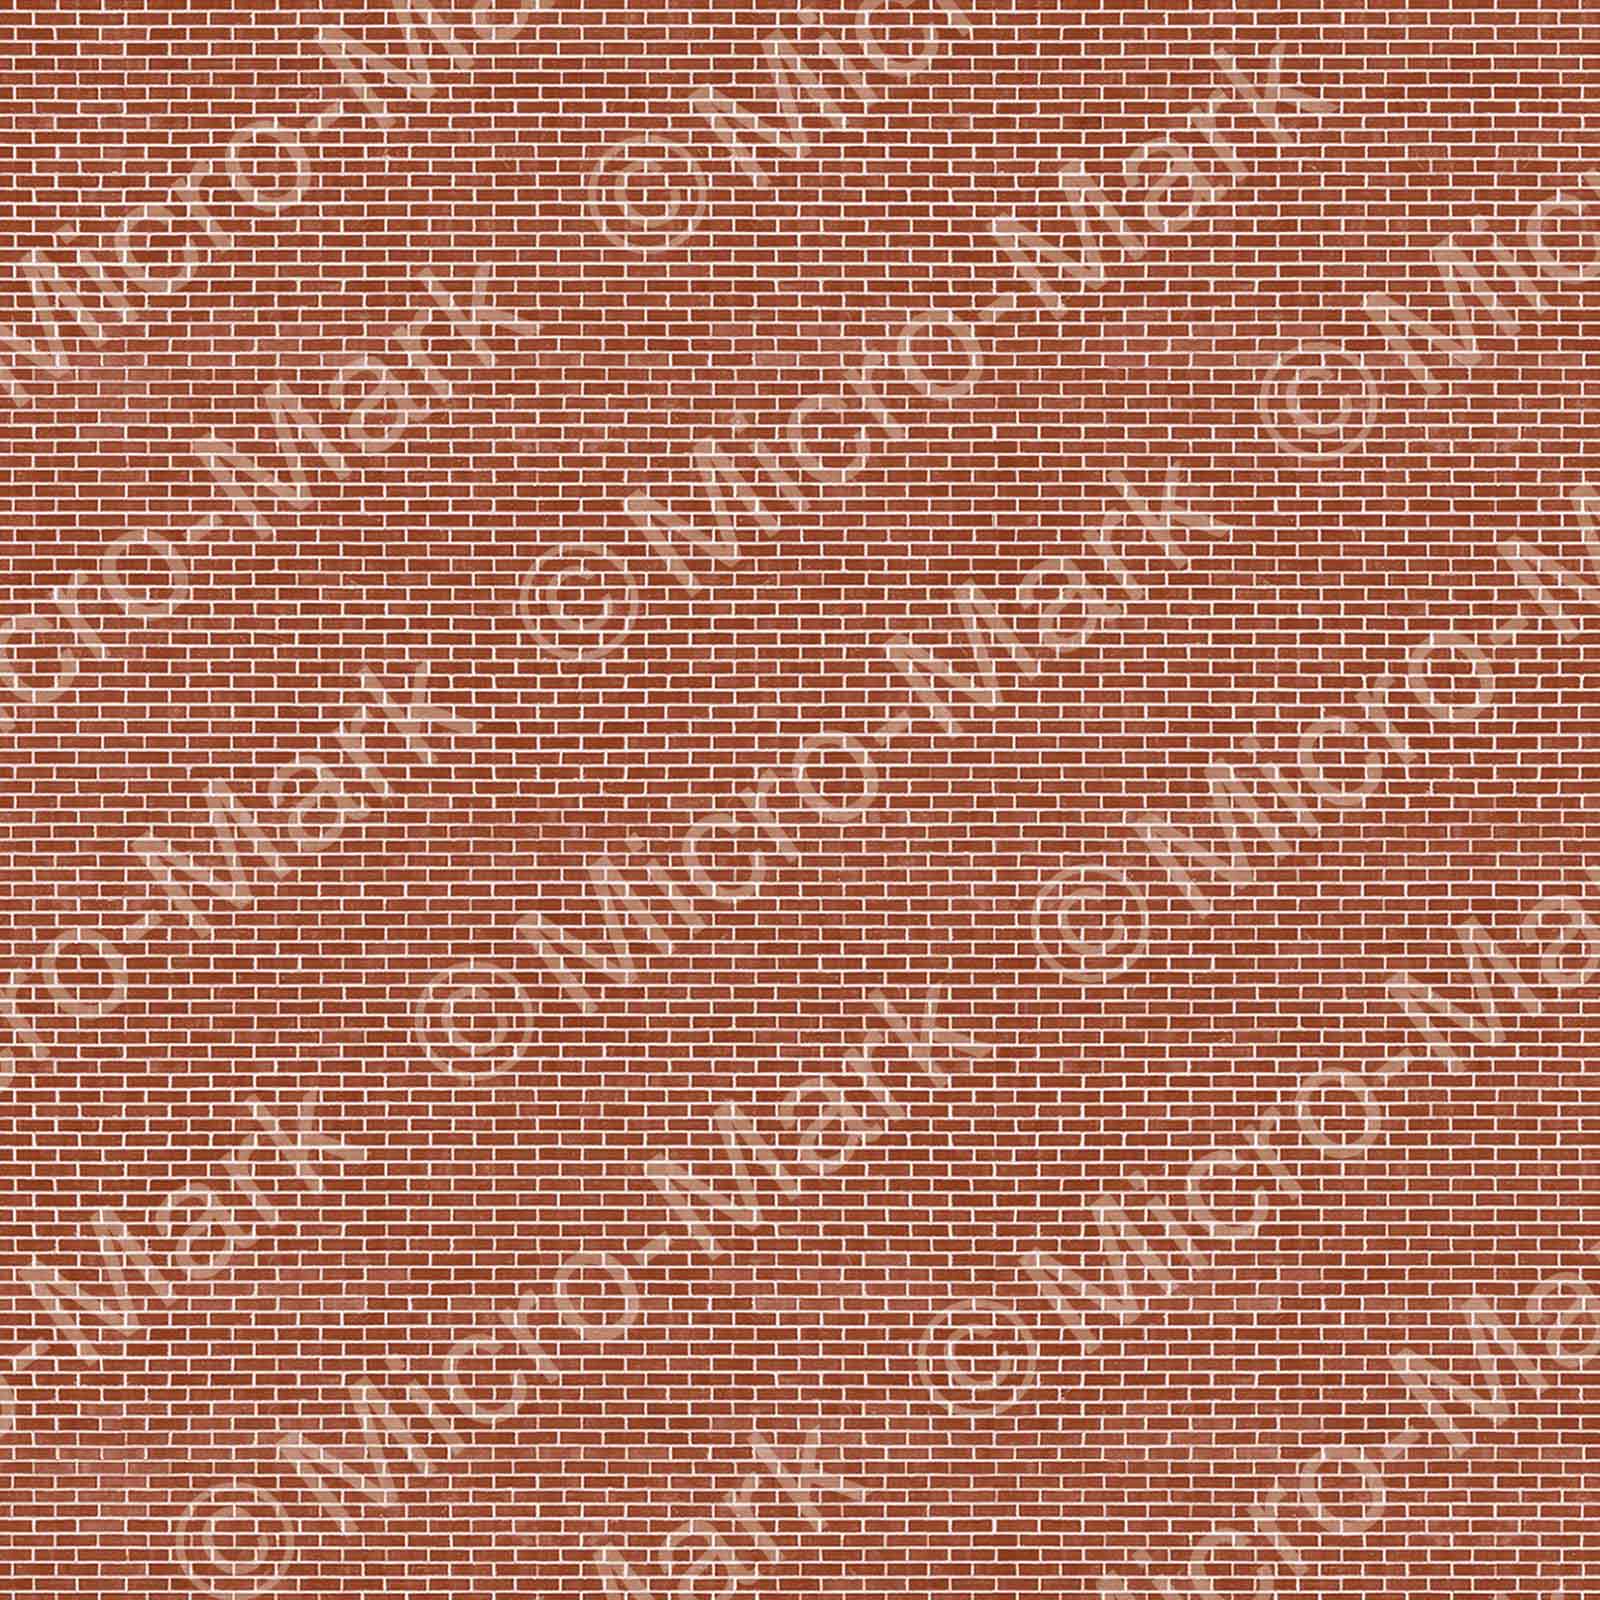 Micro - Mark Aged Factory Brick, O Scale - 4pk